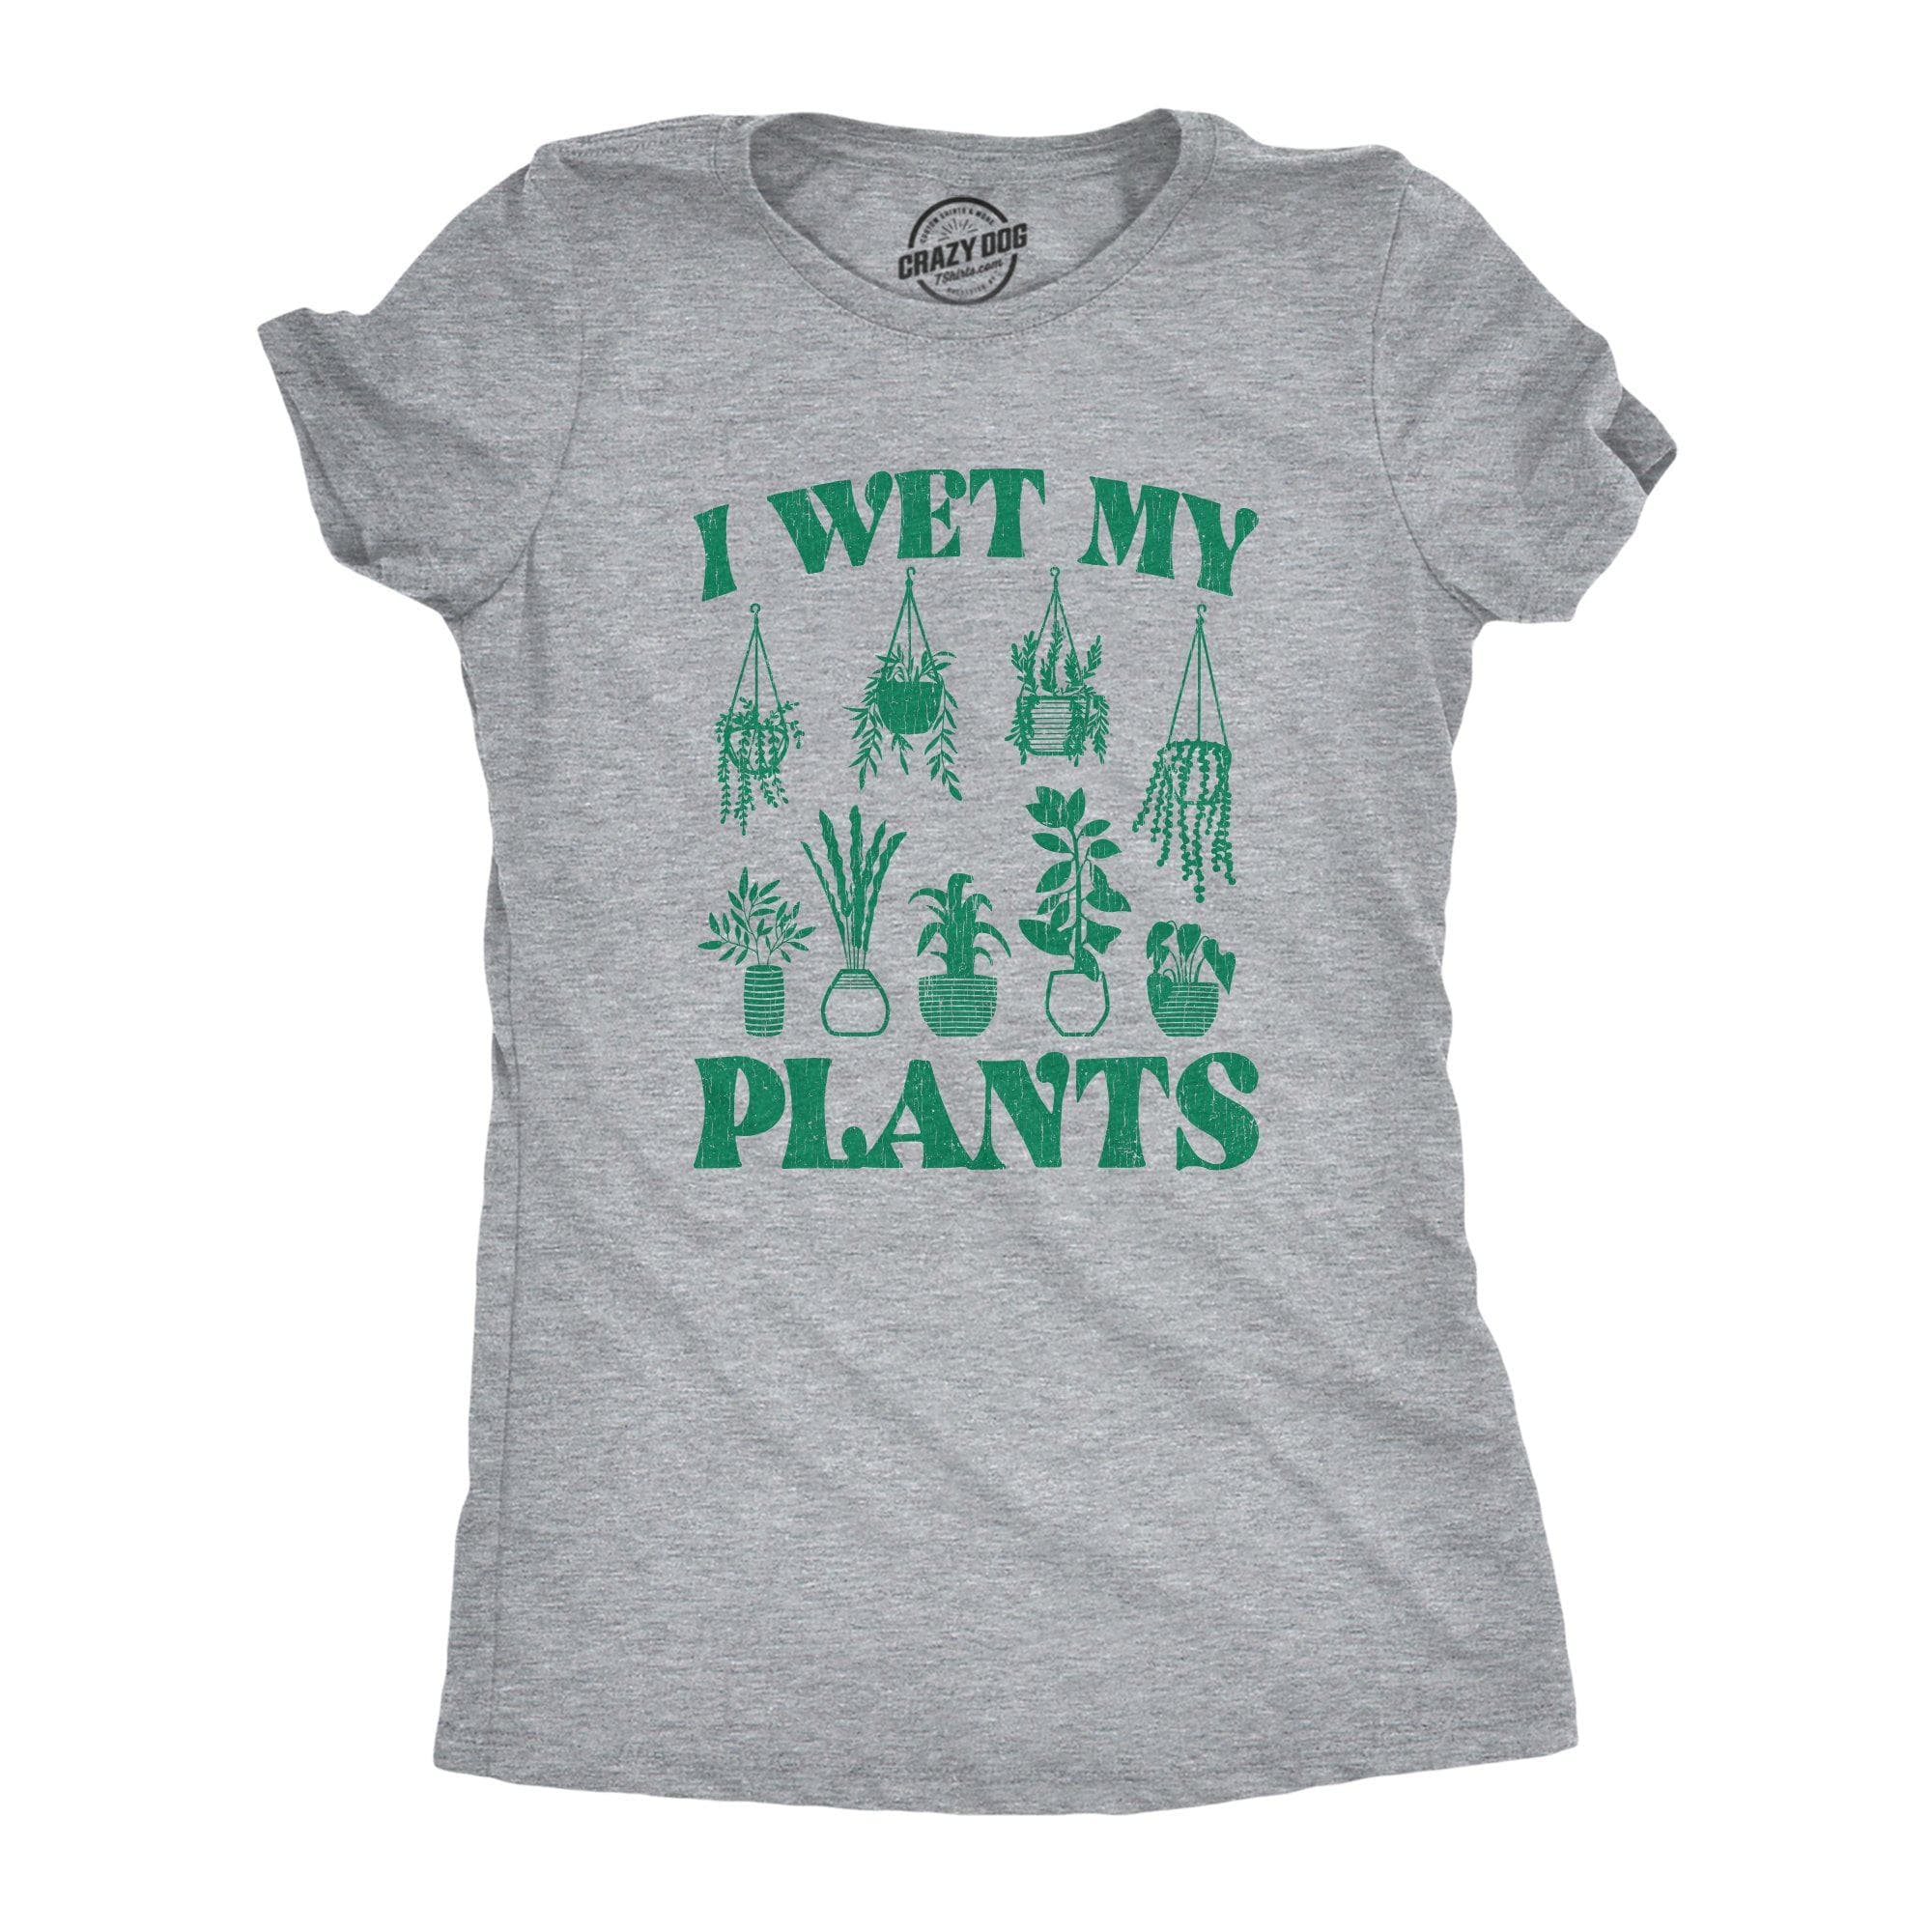 I Wet My Plants Women's Tshirt - Crazy Dog T-Shirts